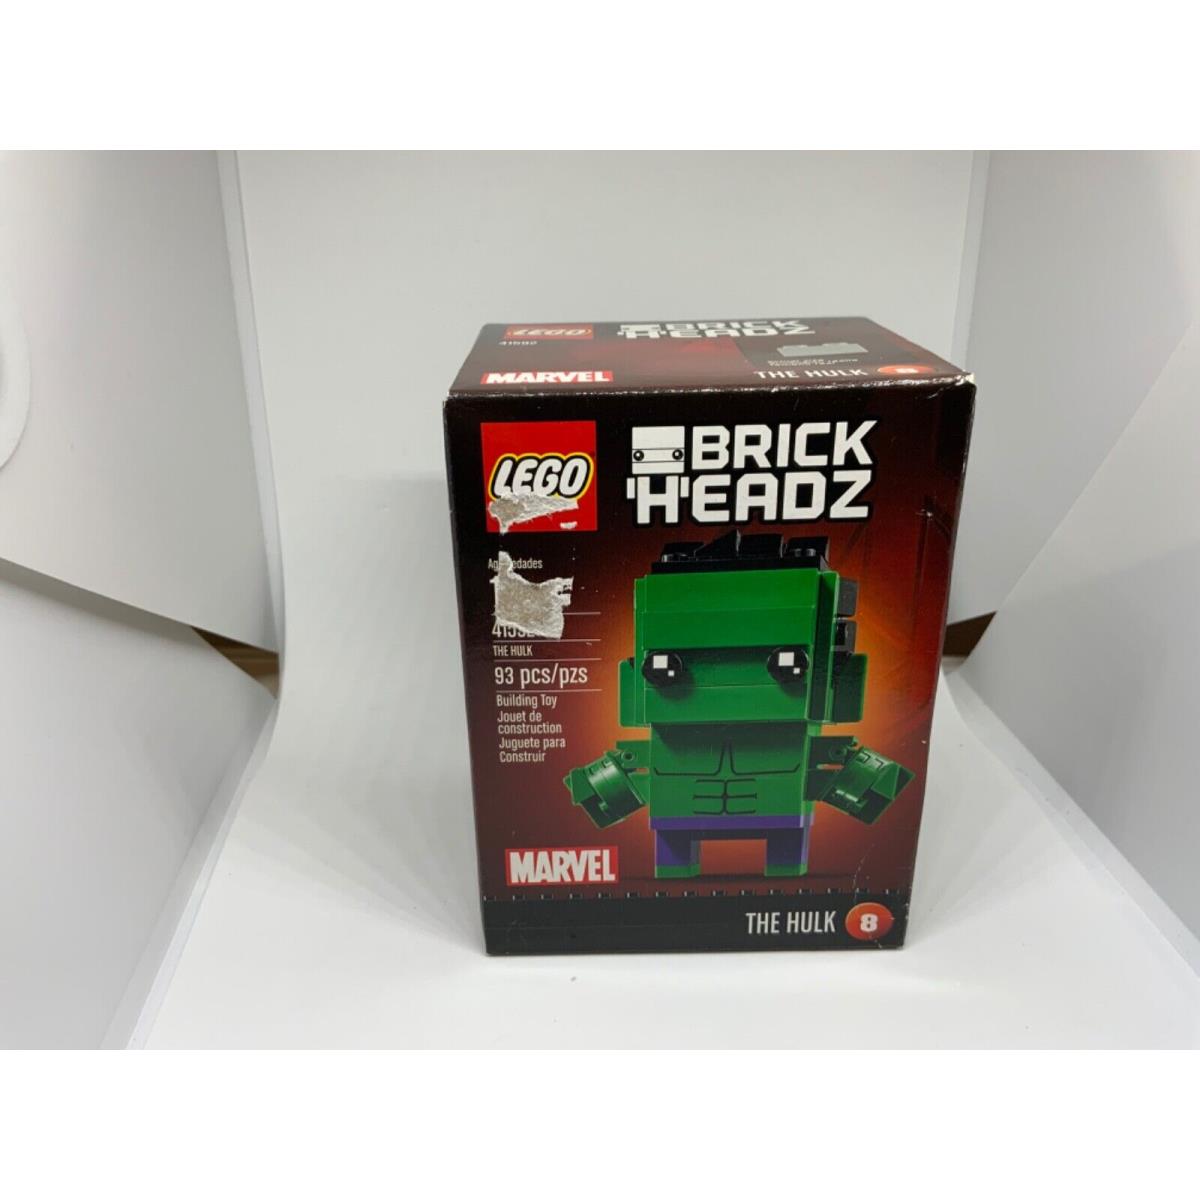 Lego 41592 Brickheadz The Hulk 8 New/sealed Retired